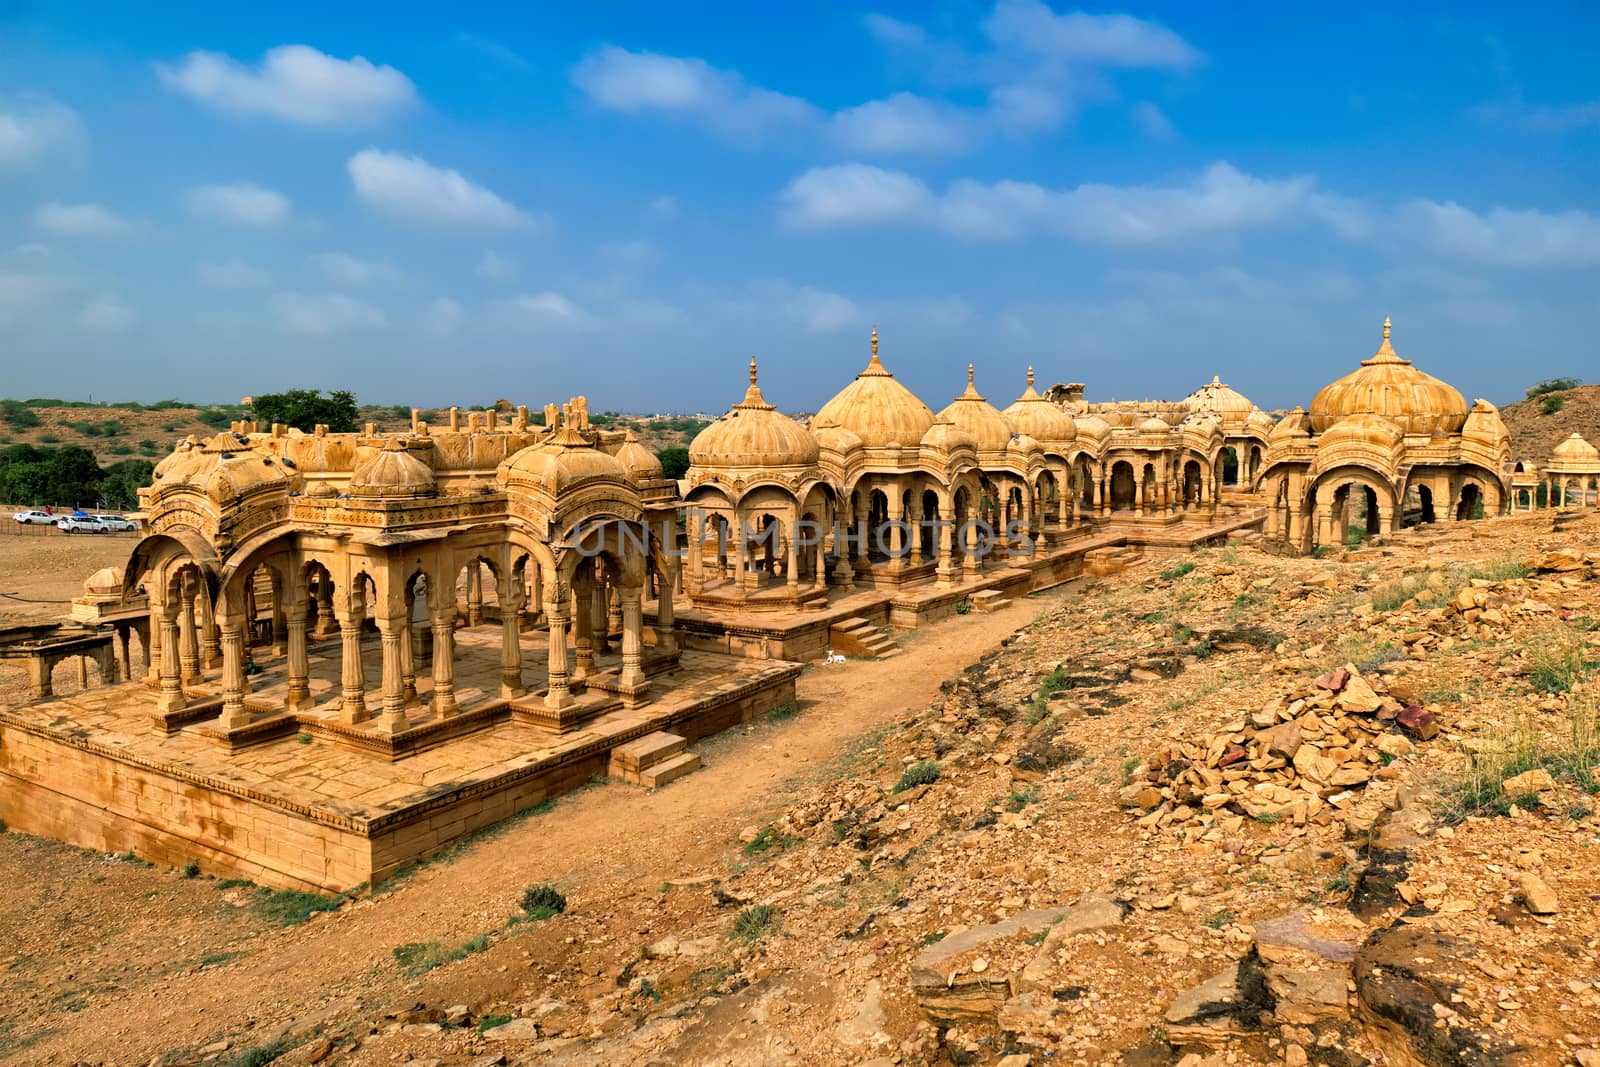 Bada Bagh cenotaphs Hindu tomb mausoleum . Jaisalmer, Rajasthan, India by dimol